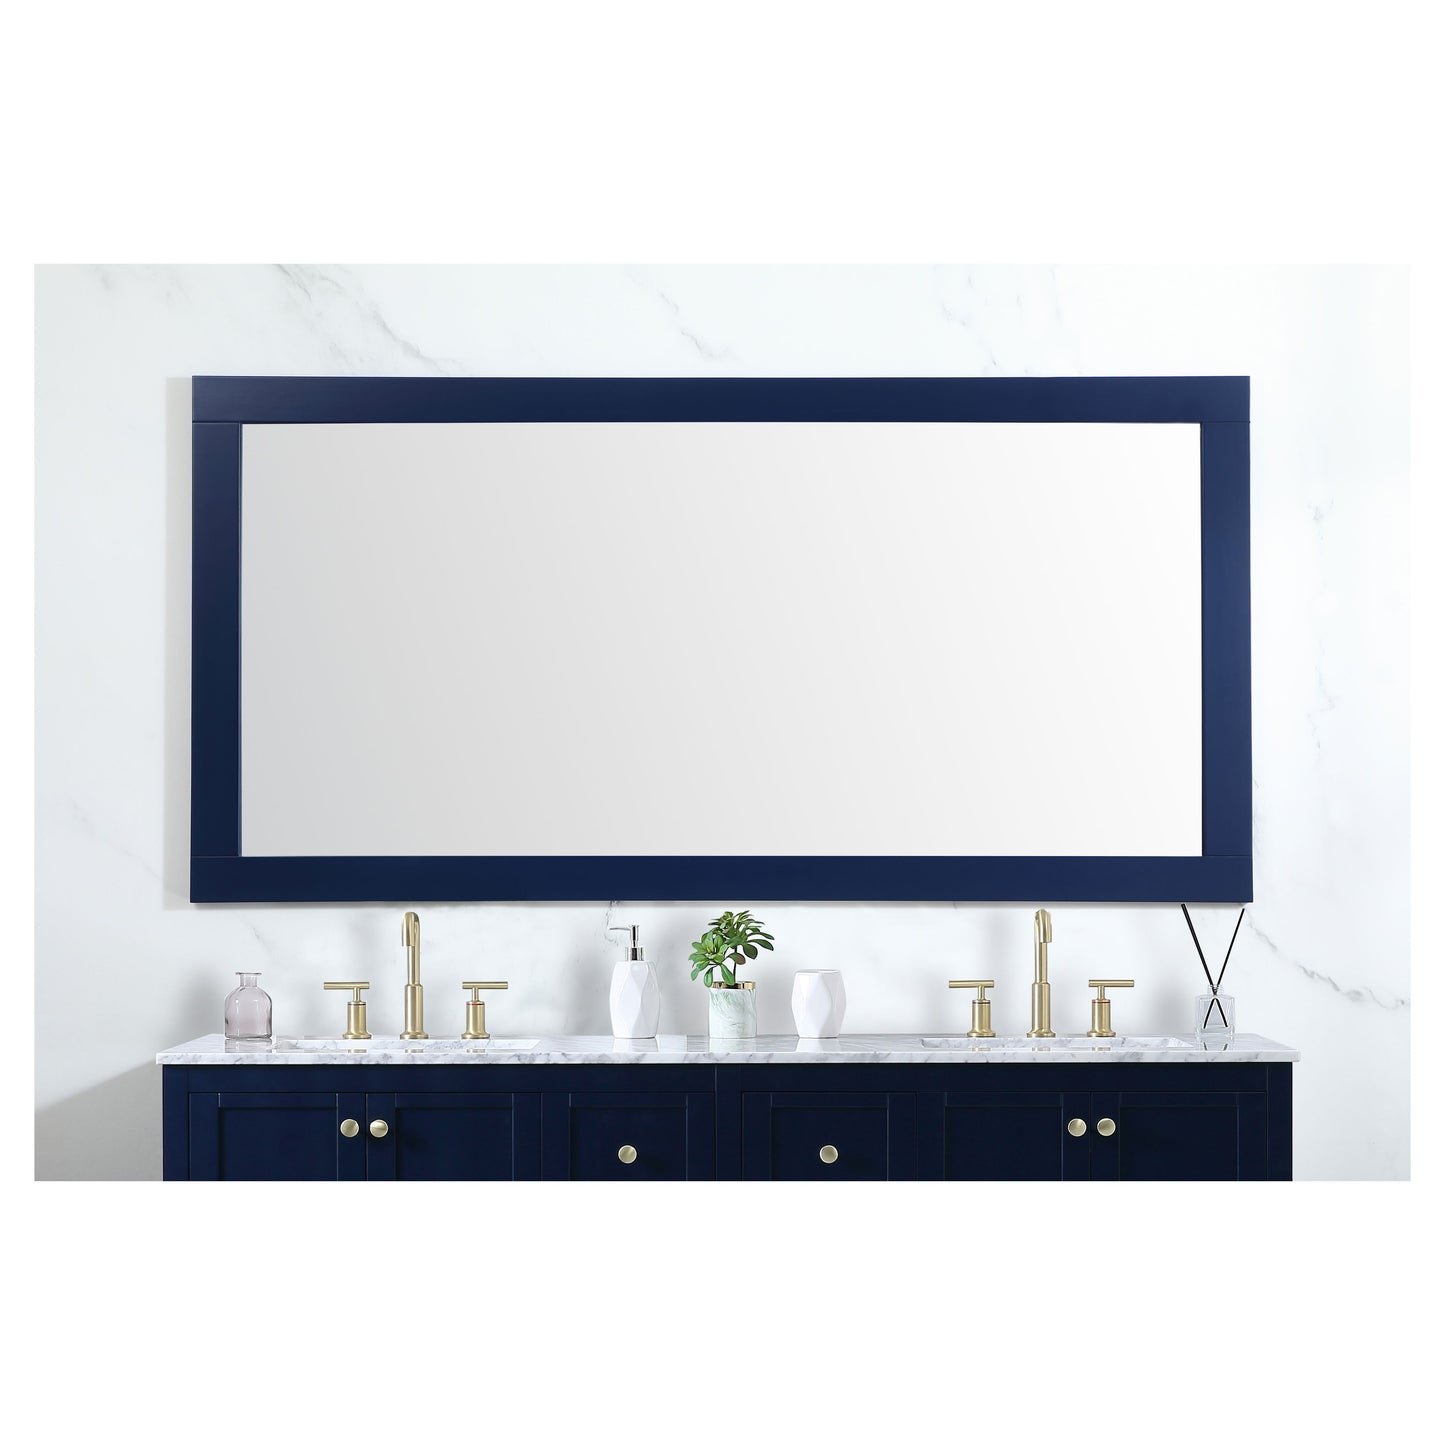 VM27236BL Aqua 72" x 36" Framed Rectangular Mirror in Blue